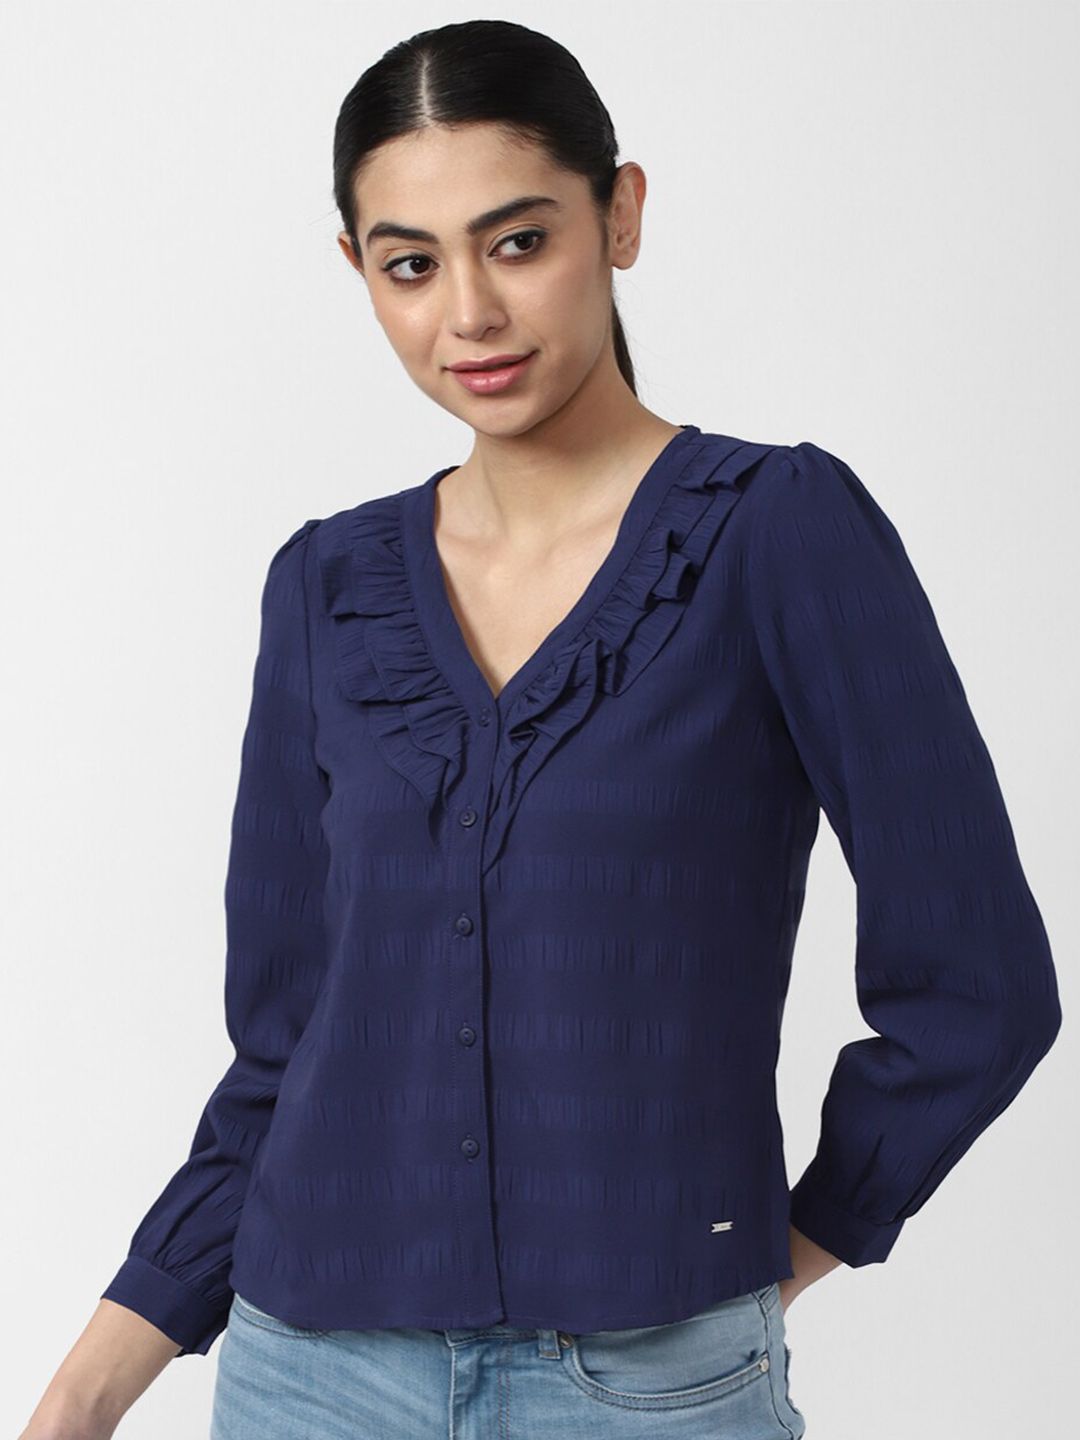 Van Heusen Woman Navy Blue Shirt Style V-Neck Top Price in India